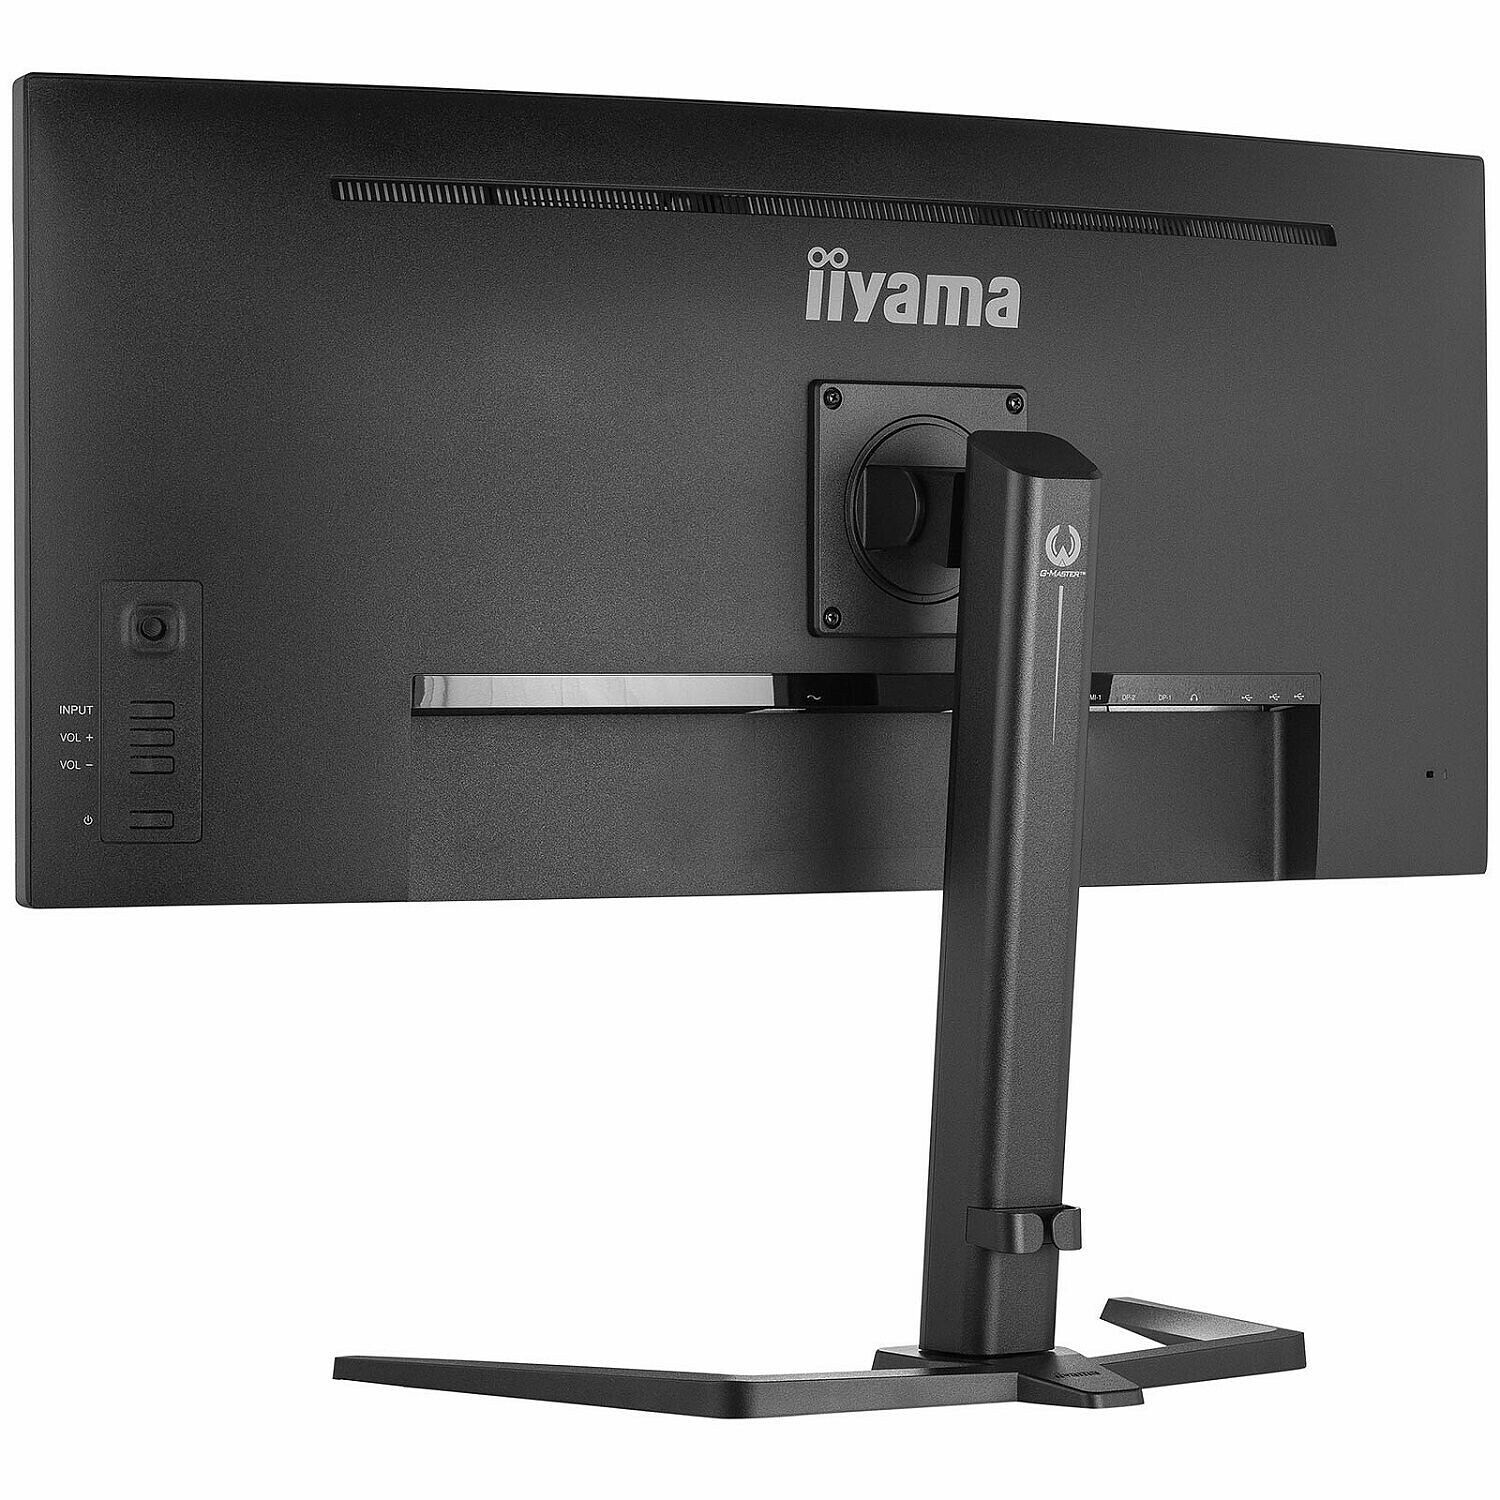 Achat écran PC iiyama 21, 24, 27 pouces, écran prolite & g-master